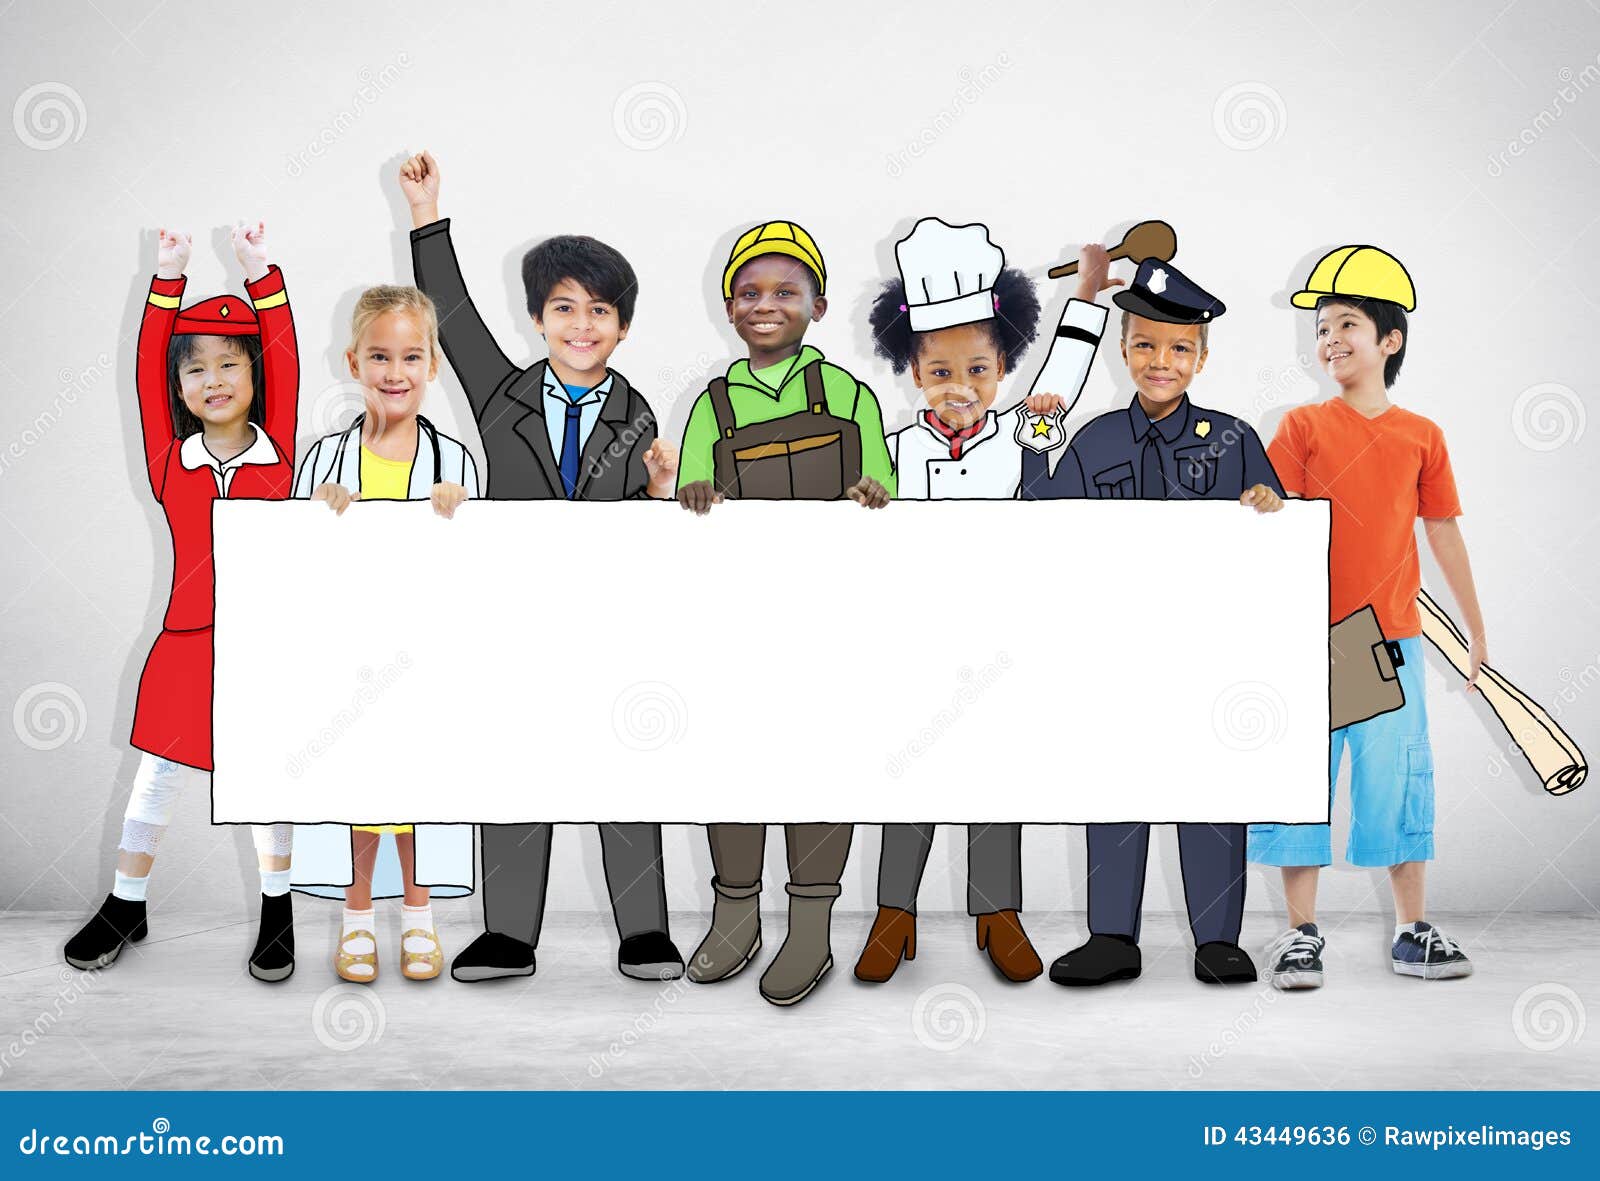 children wearing future job uniforms